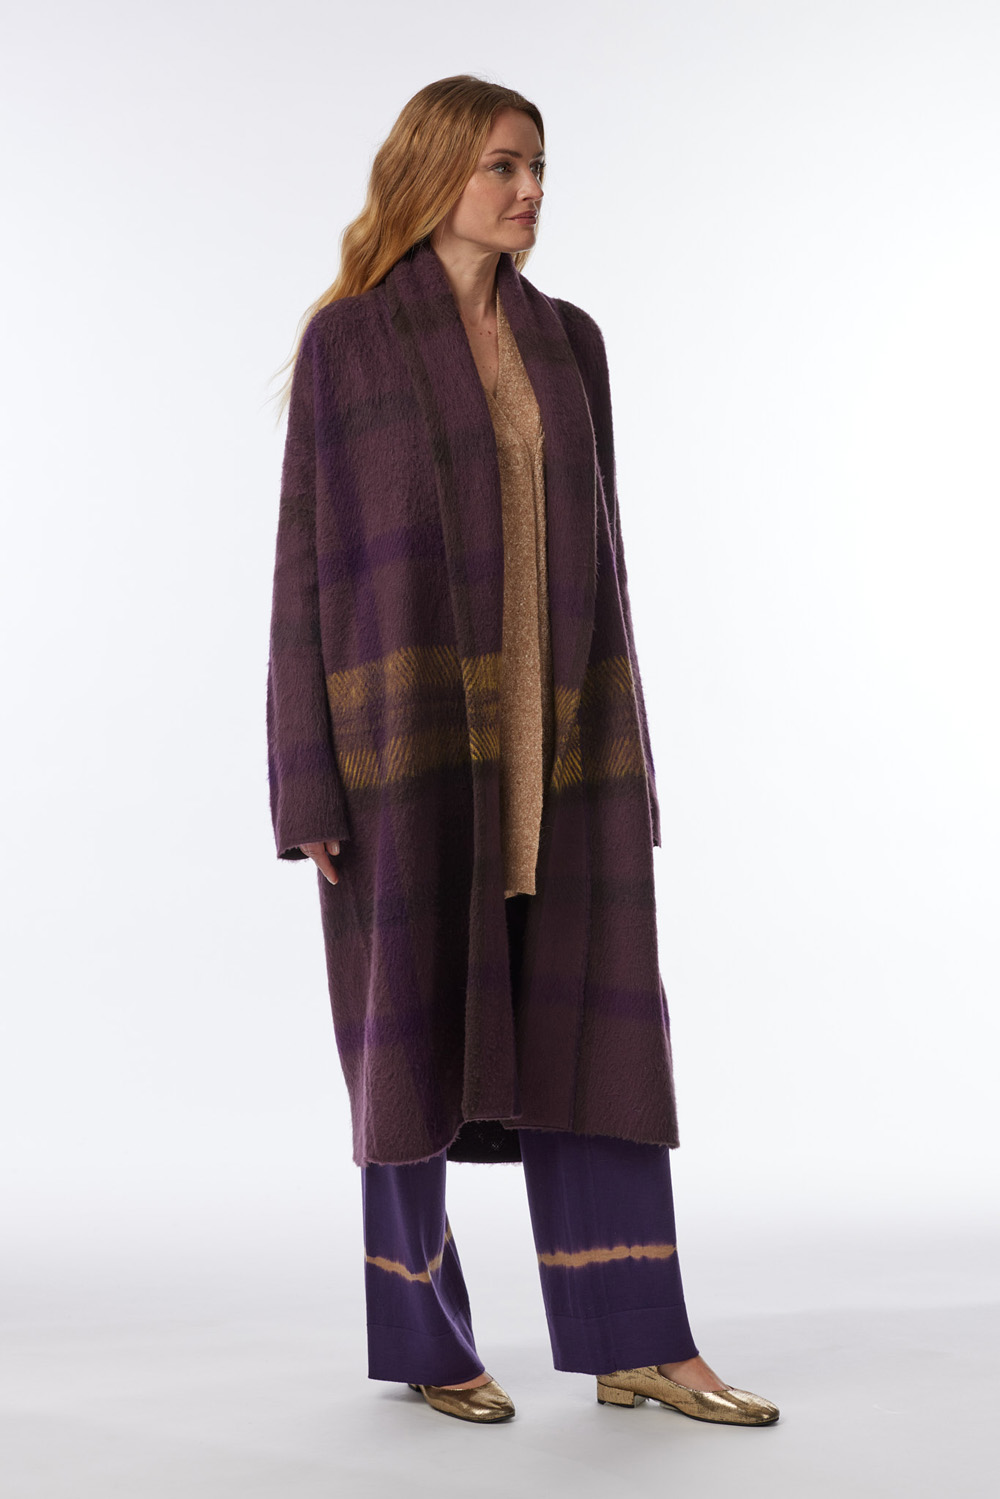 Fabric knit coat in Extrafine Merino, carding treatment